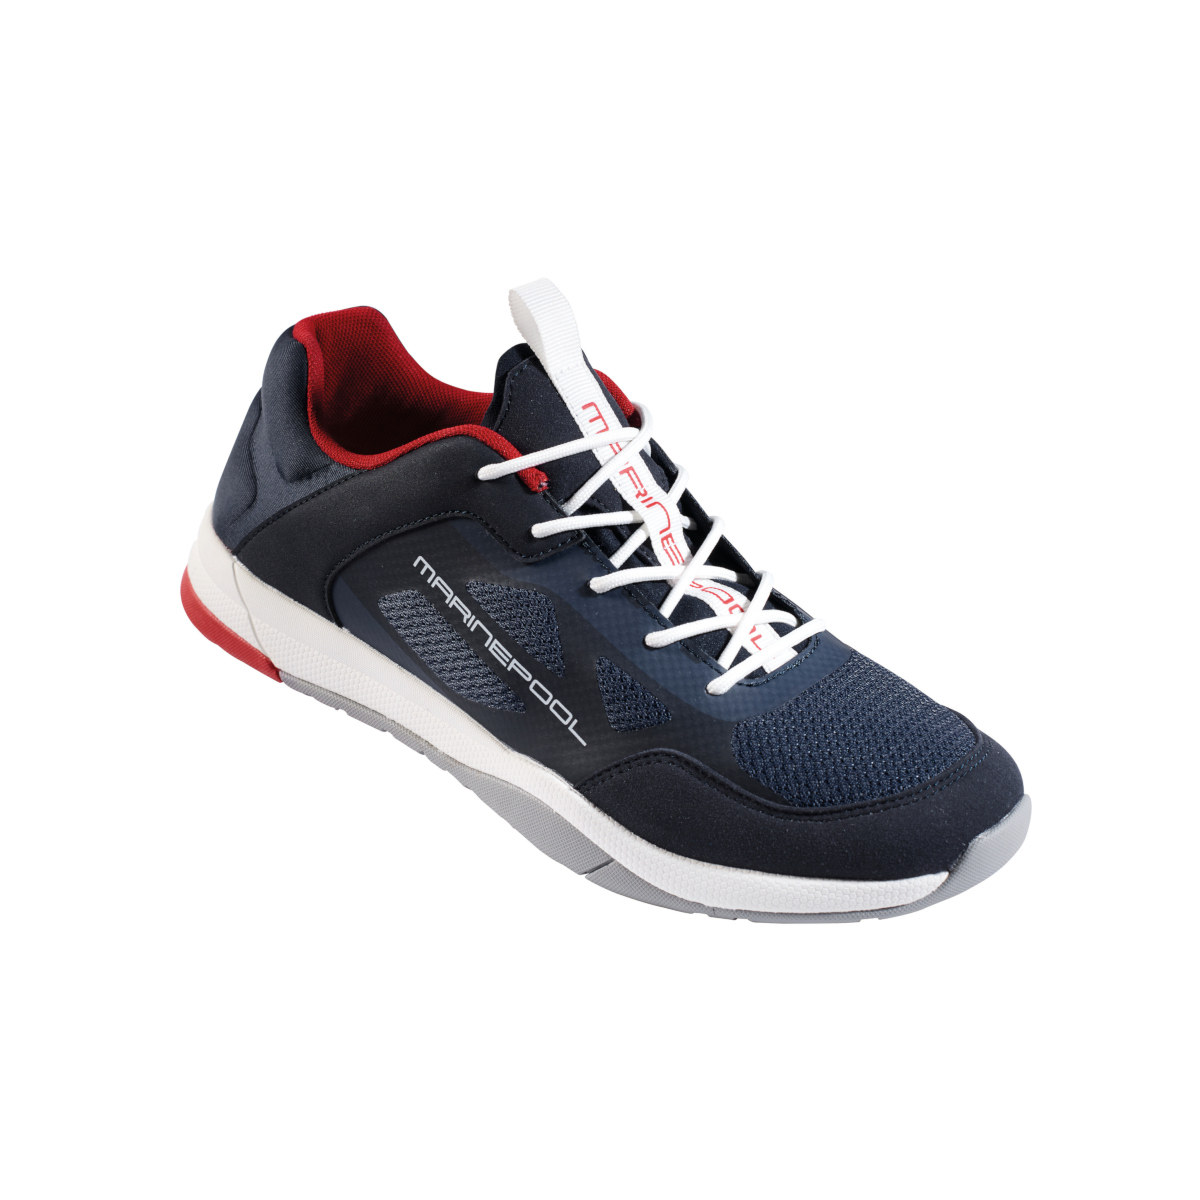 Marinepool Ocean Spirit chaussure de pont, homme - bleu marine/rouge, pointure 44